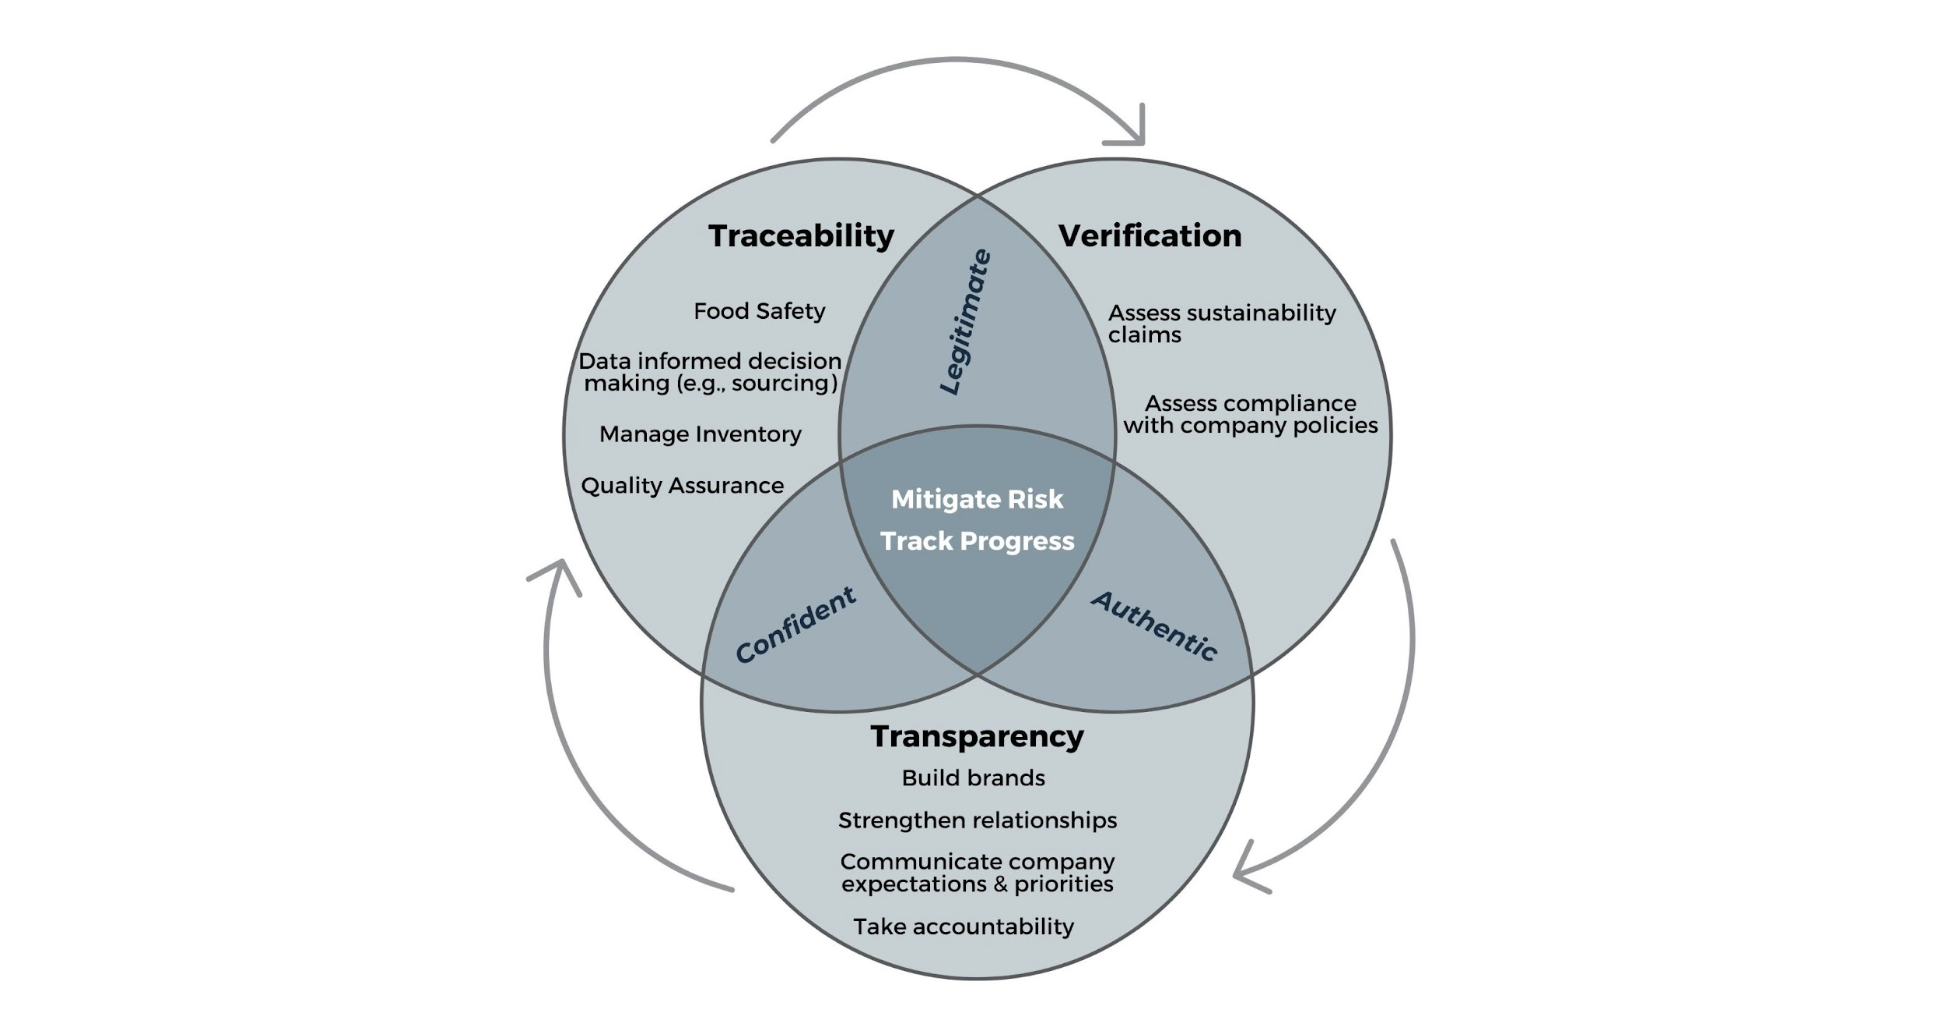 infoographic on verification